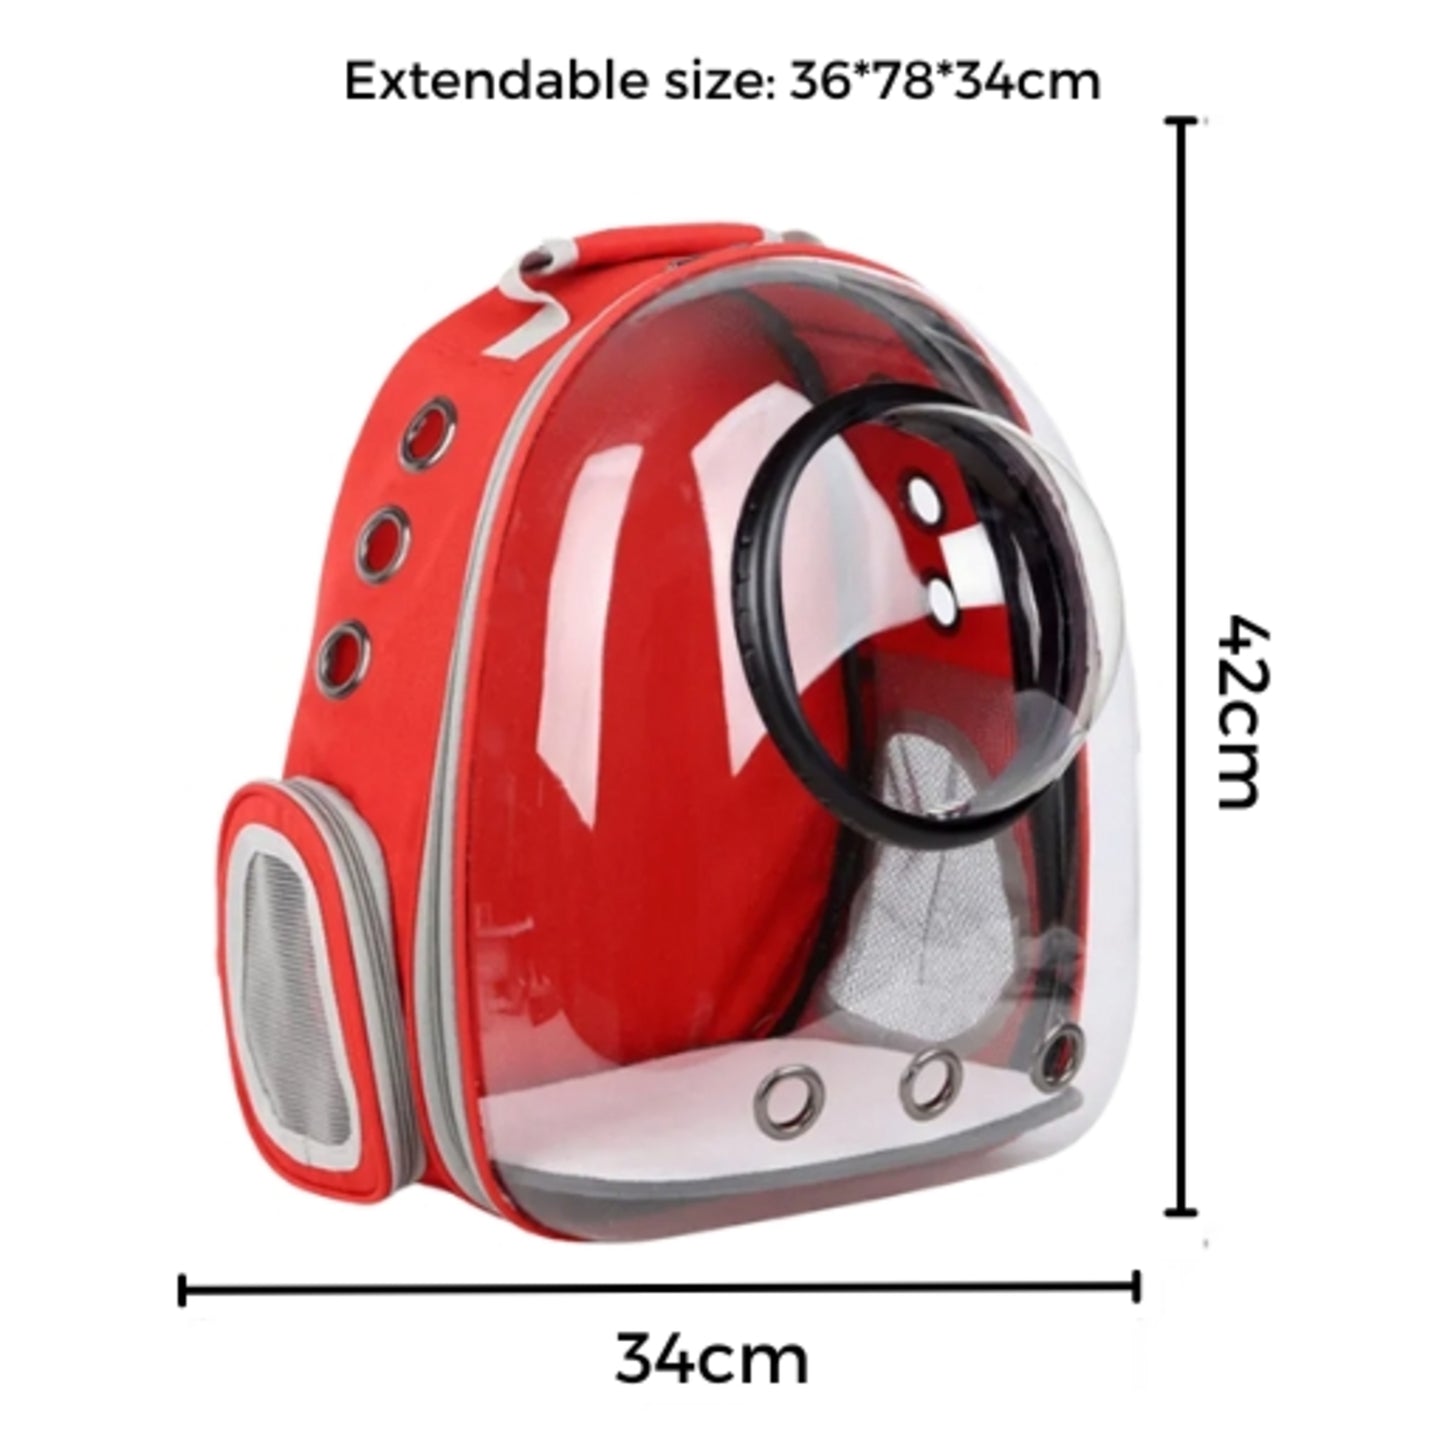 Floofi Expandable Space Capsule Backpack - Model 2 (Red) FI-BP-119-FCQ